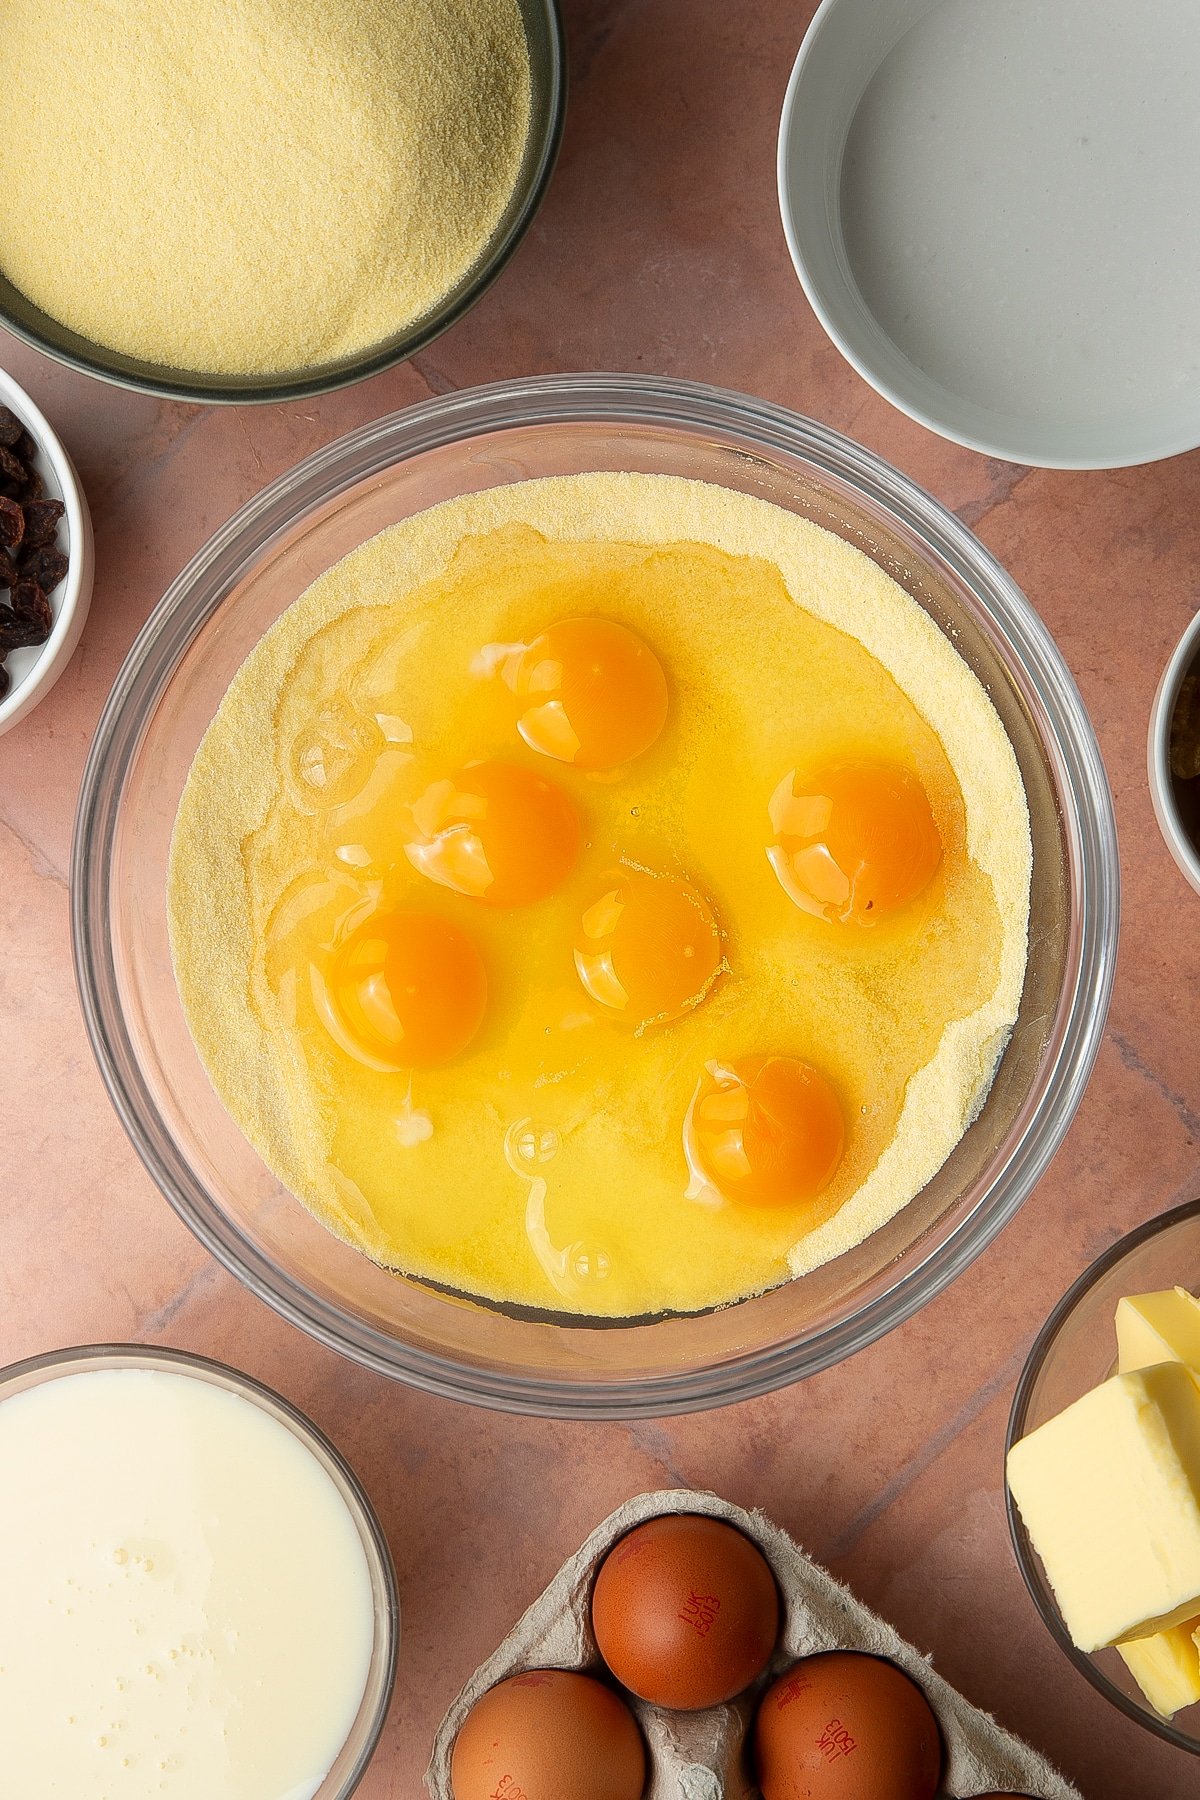 Semolina, sugar and eggs in a bowl. Ingredients to make sanwin-makin surround the bowl.